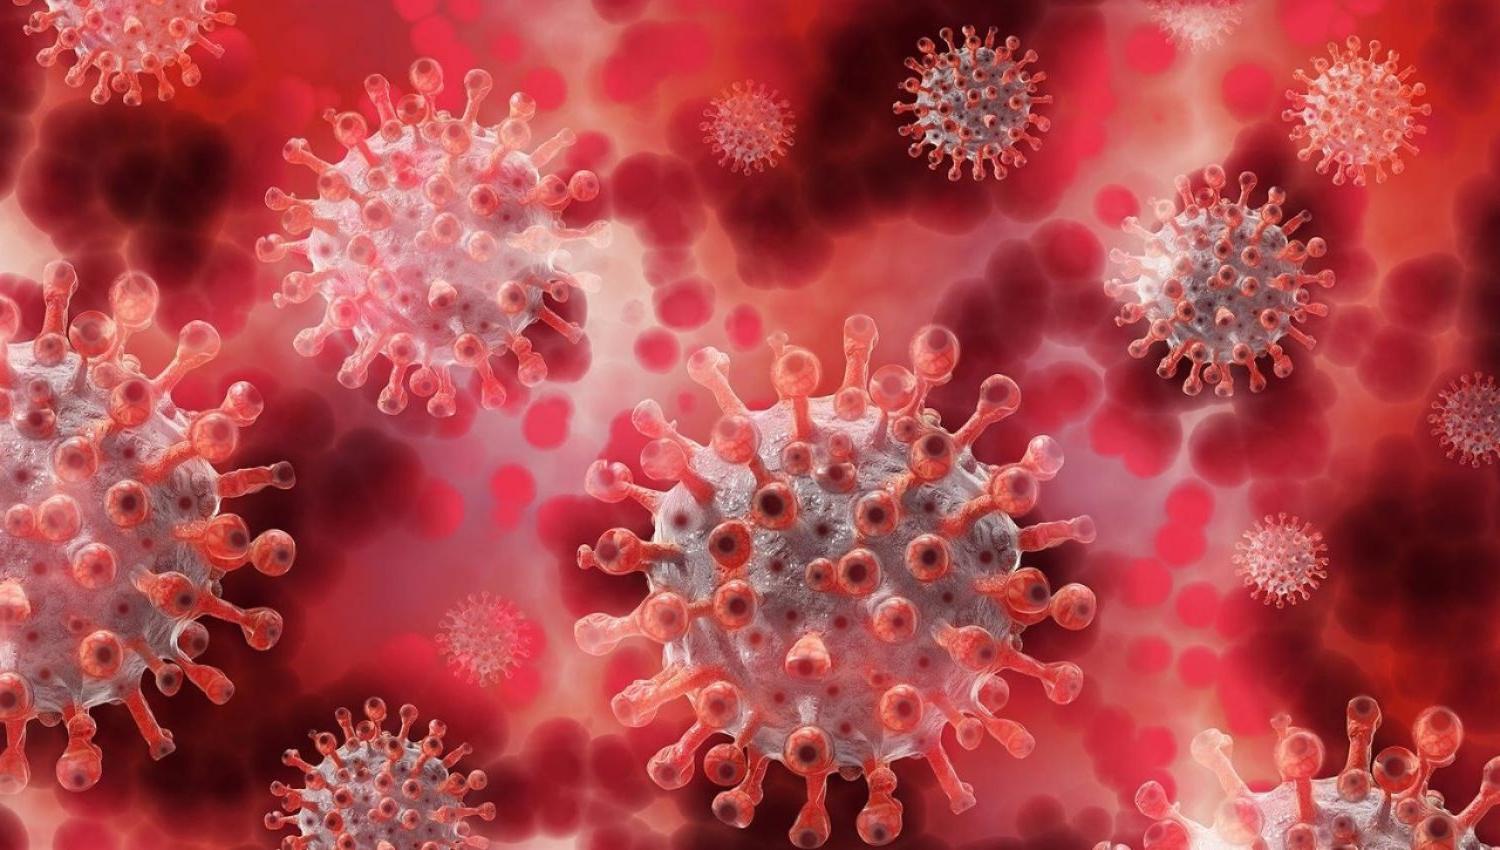 A close-up of the coronavirus